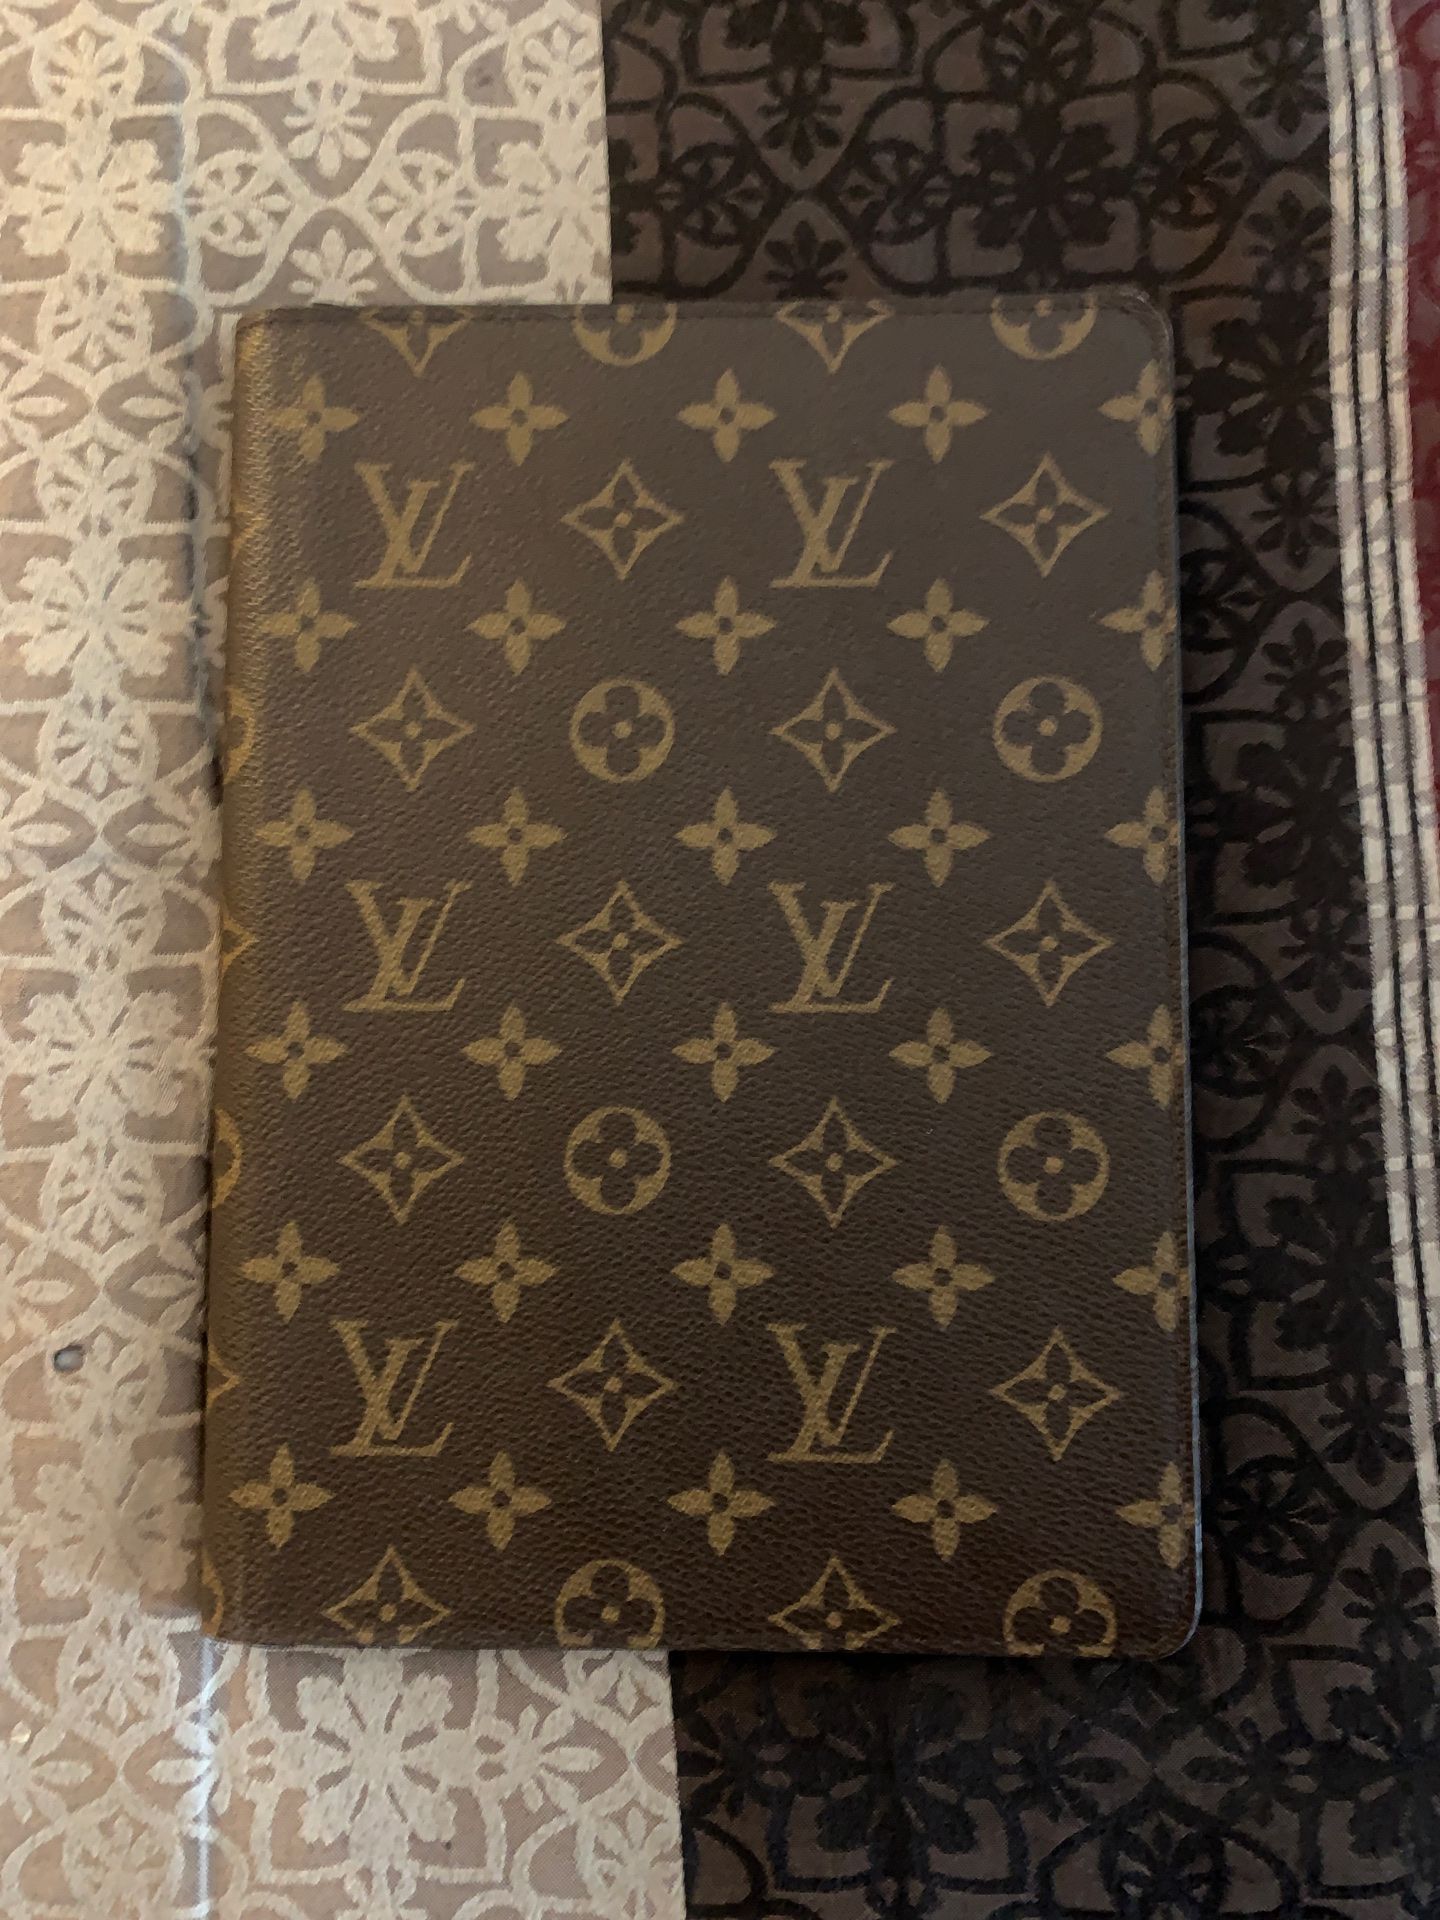 Official Louie Vuitton iPad case